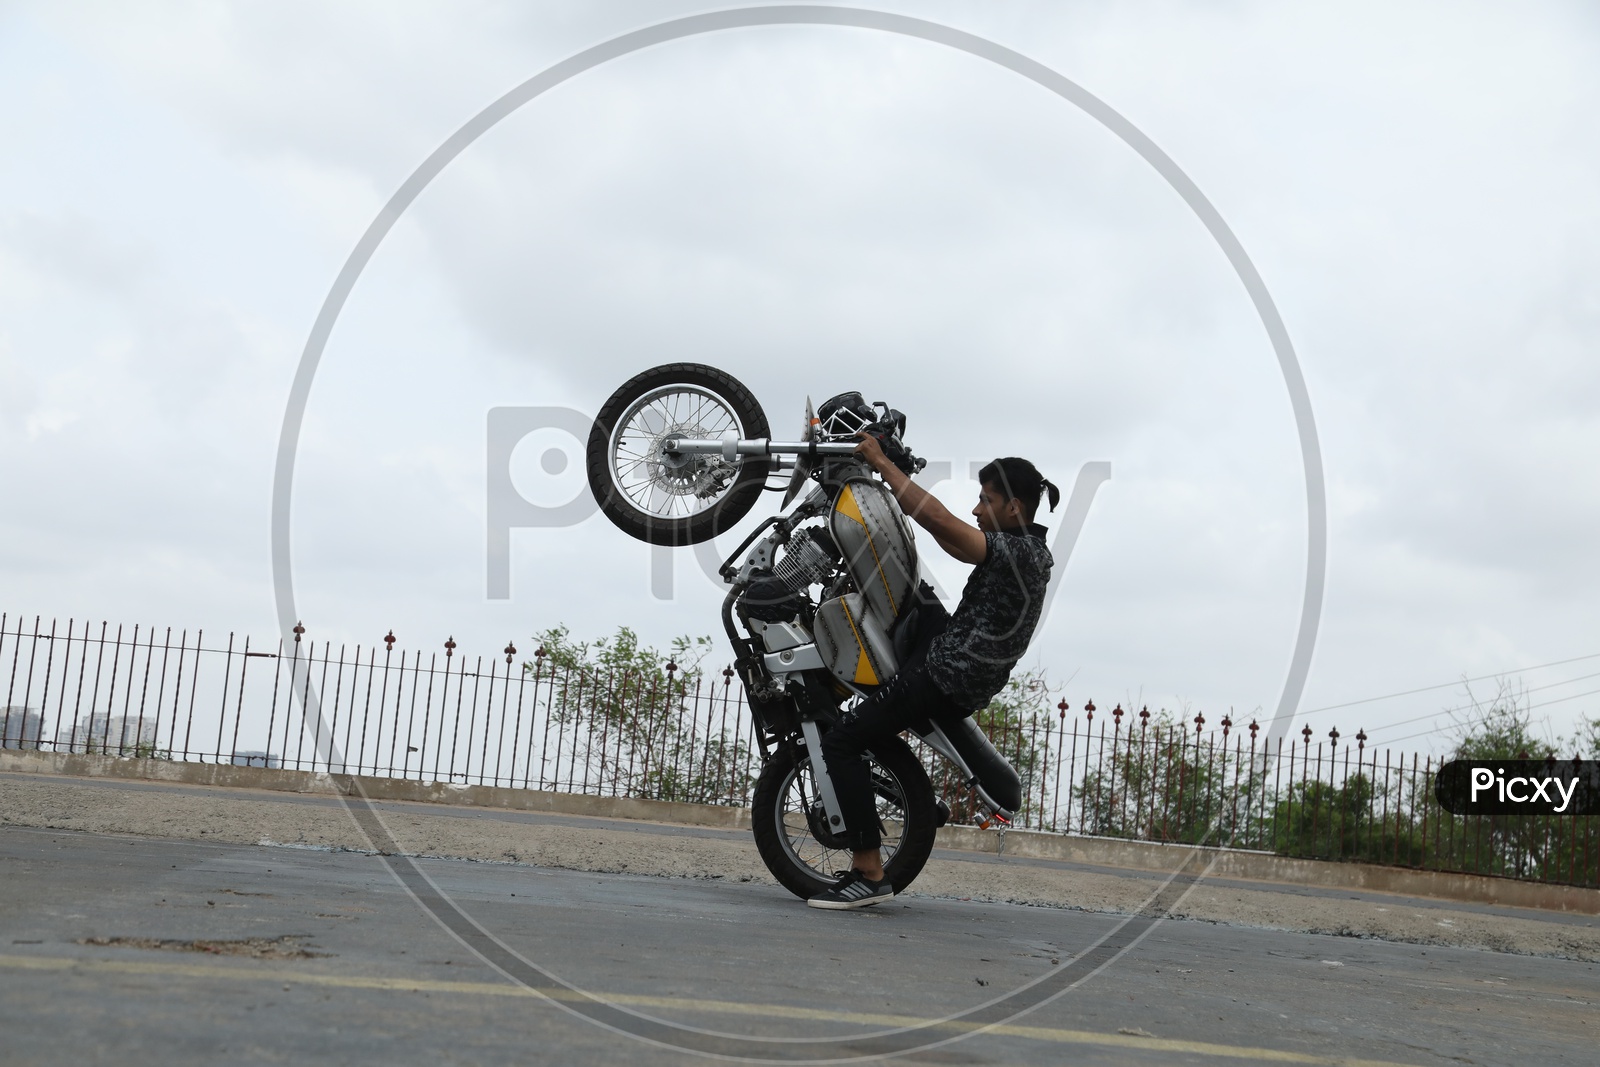 Biker Performing Stunts